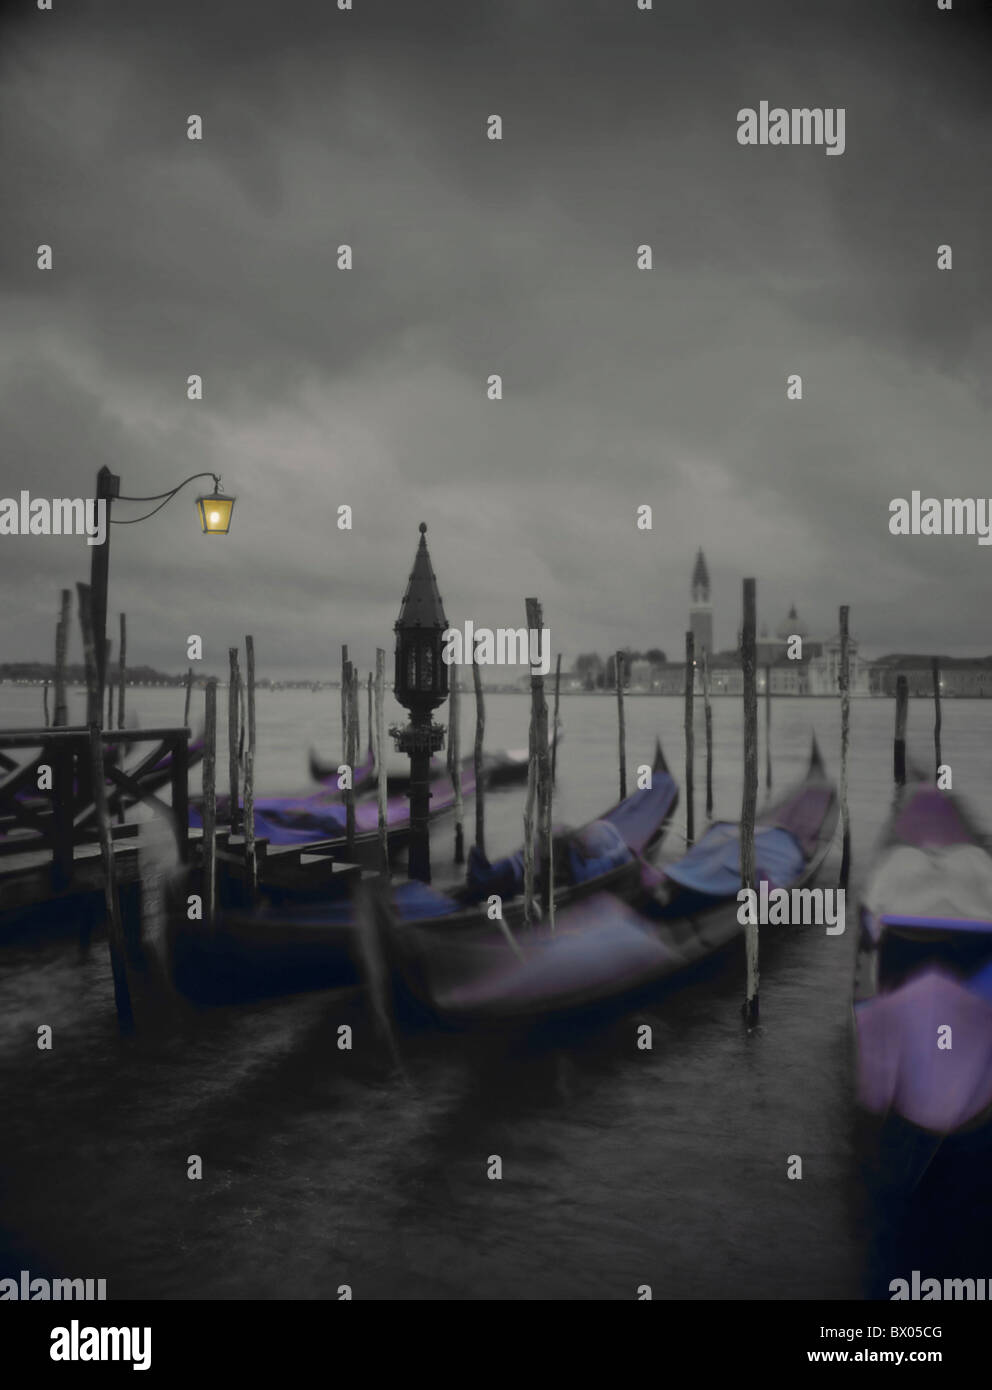 dusk twilight sombre gloomy grimly gondolas gray Italy Europe dreary Venice clouds weather Stock Photo